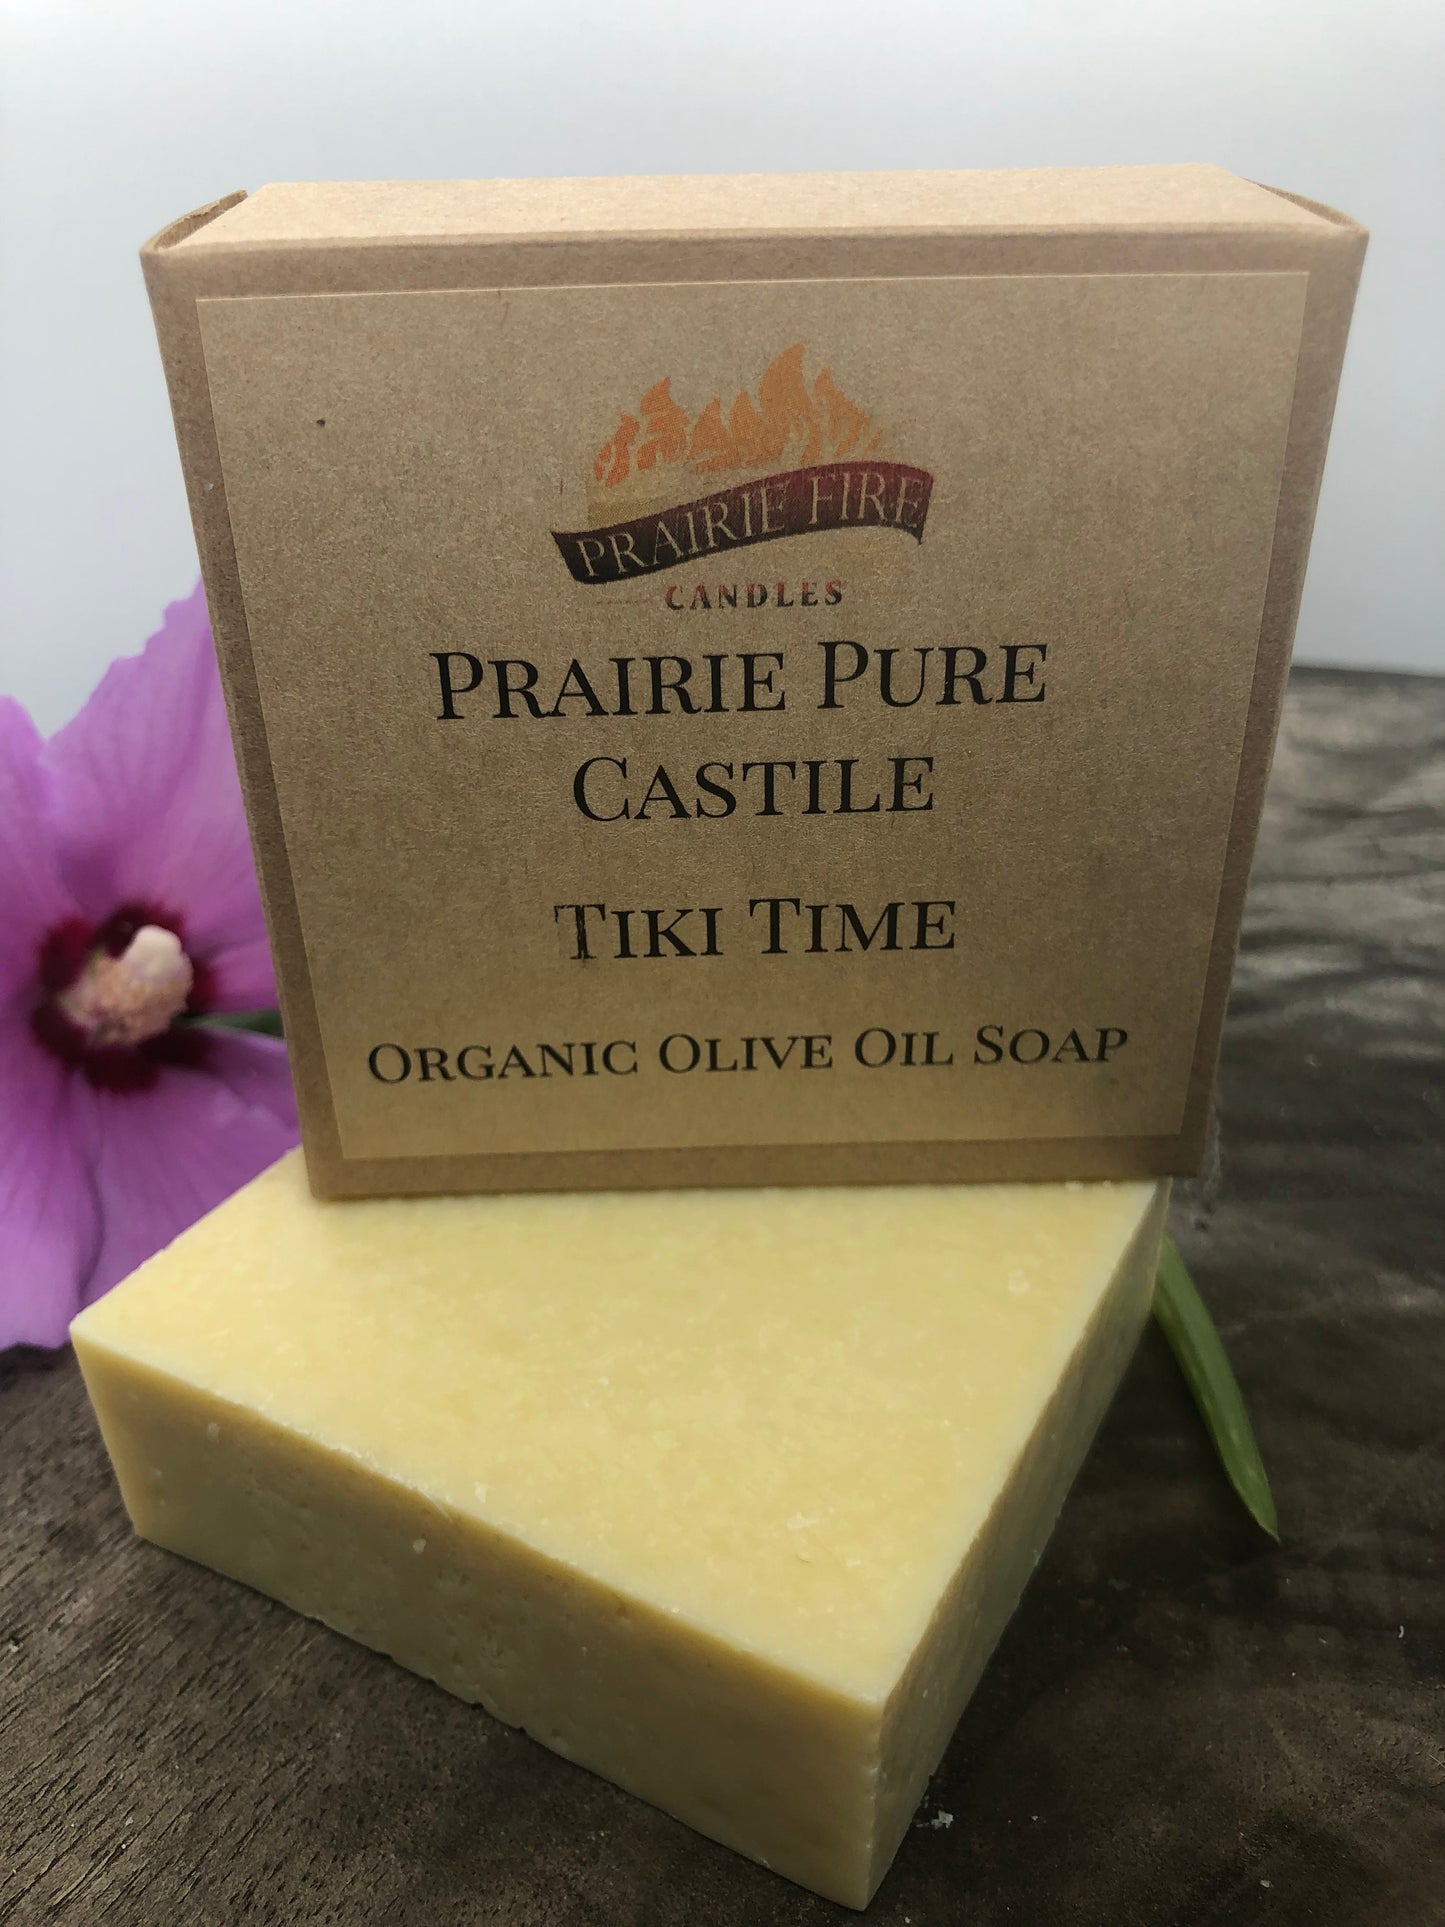 Tiki Time Real Castile Organic Olive Oil Soap for Sensitive Skin - Dye Free - 100% Certified Organic Extra Virgin Olive Oil